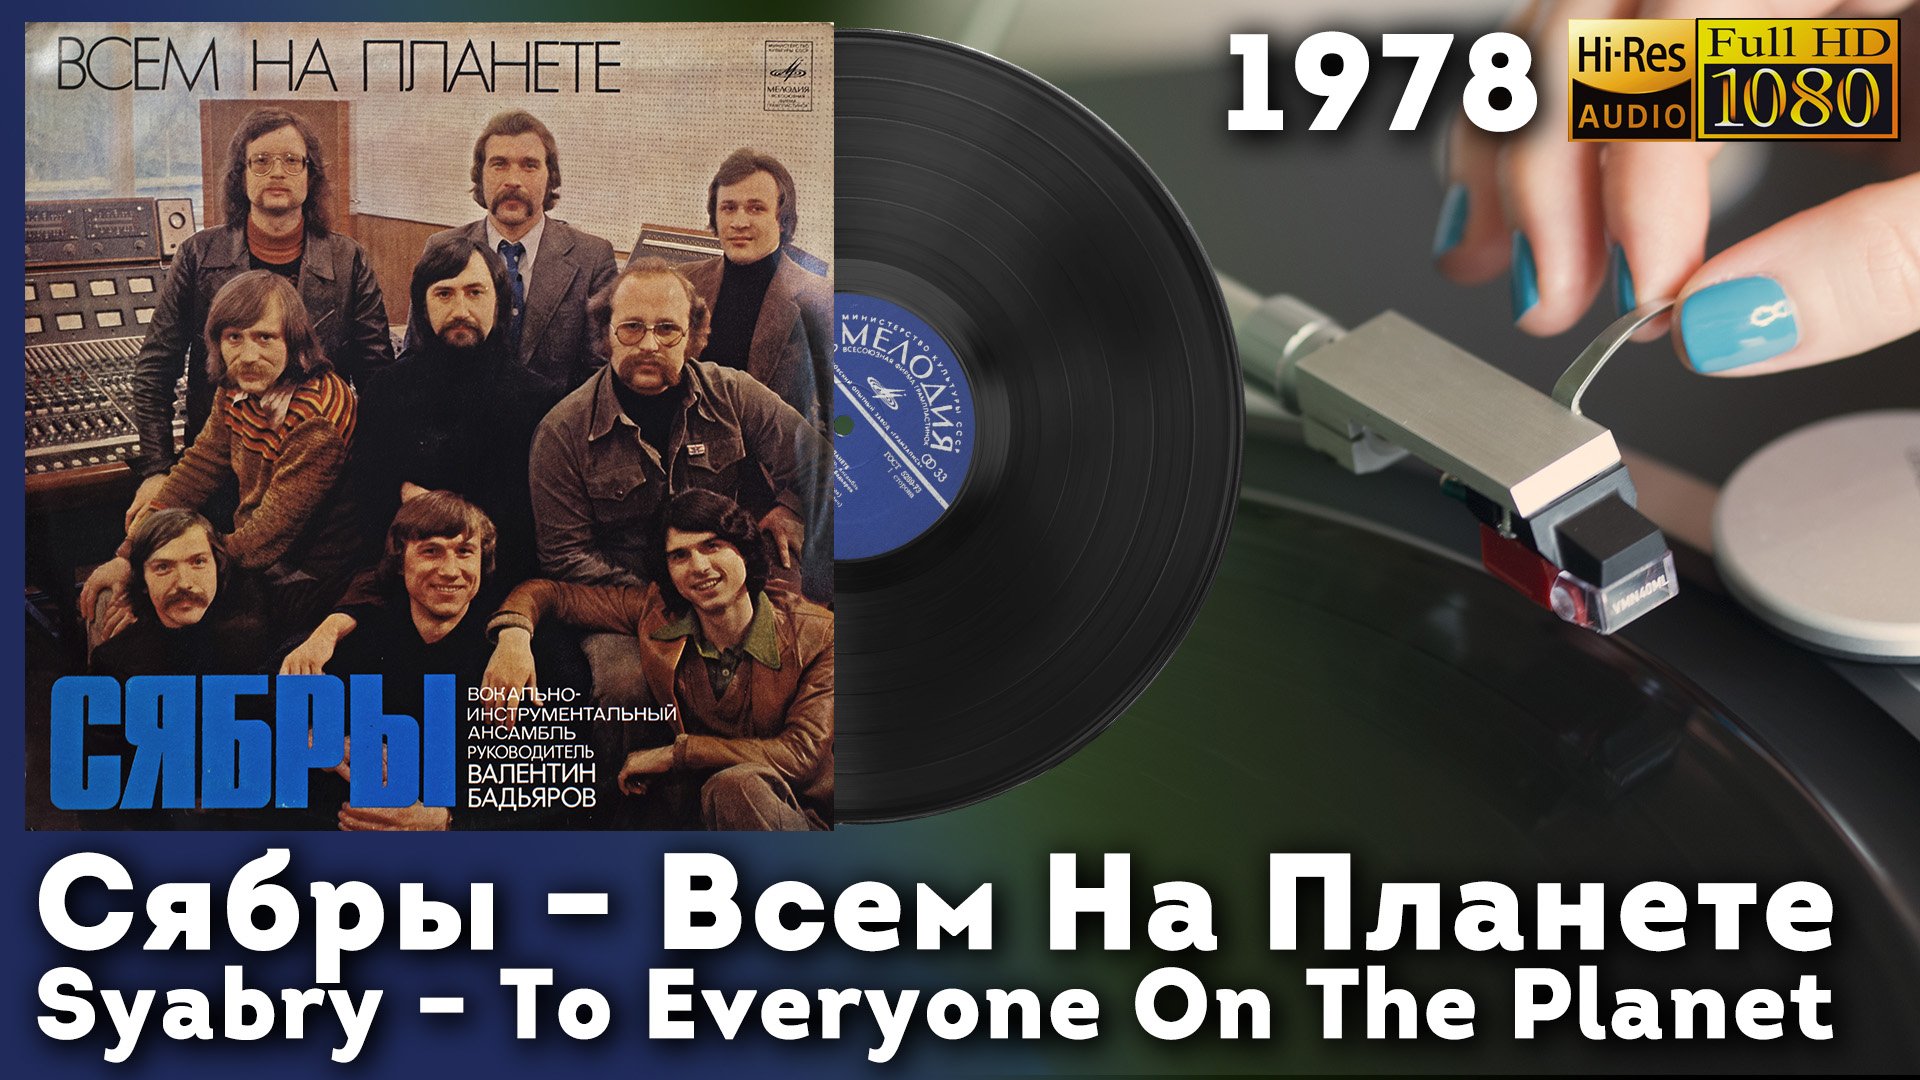 Сябры - Всем На Планете, Syabry - To Everyone On The Planet, 1978 Vinyl video 4K, 24bit/96kHz